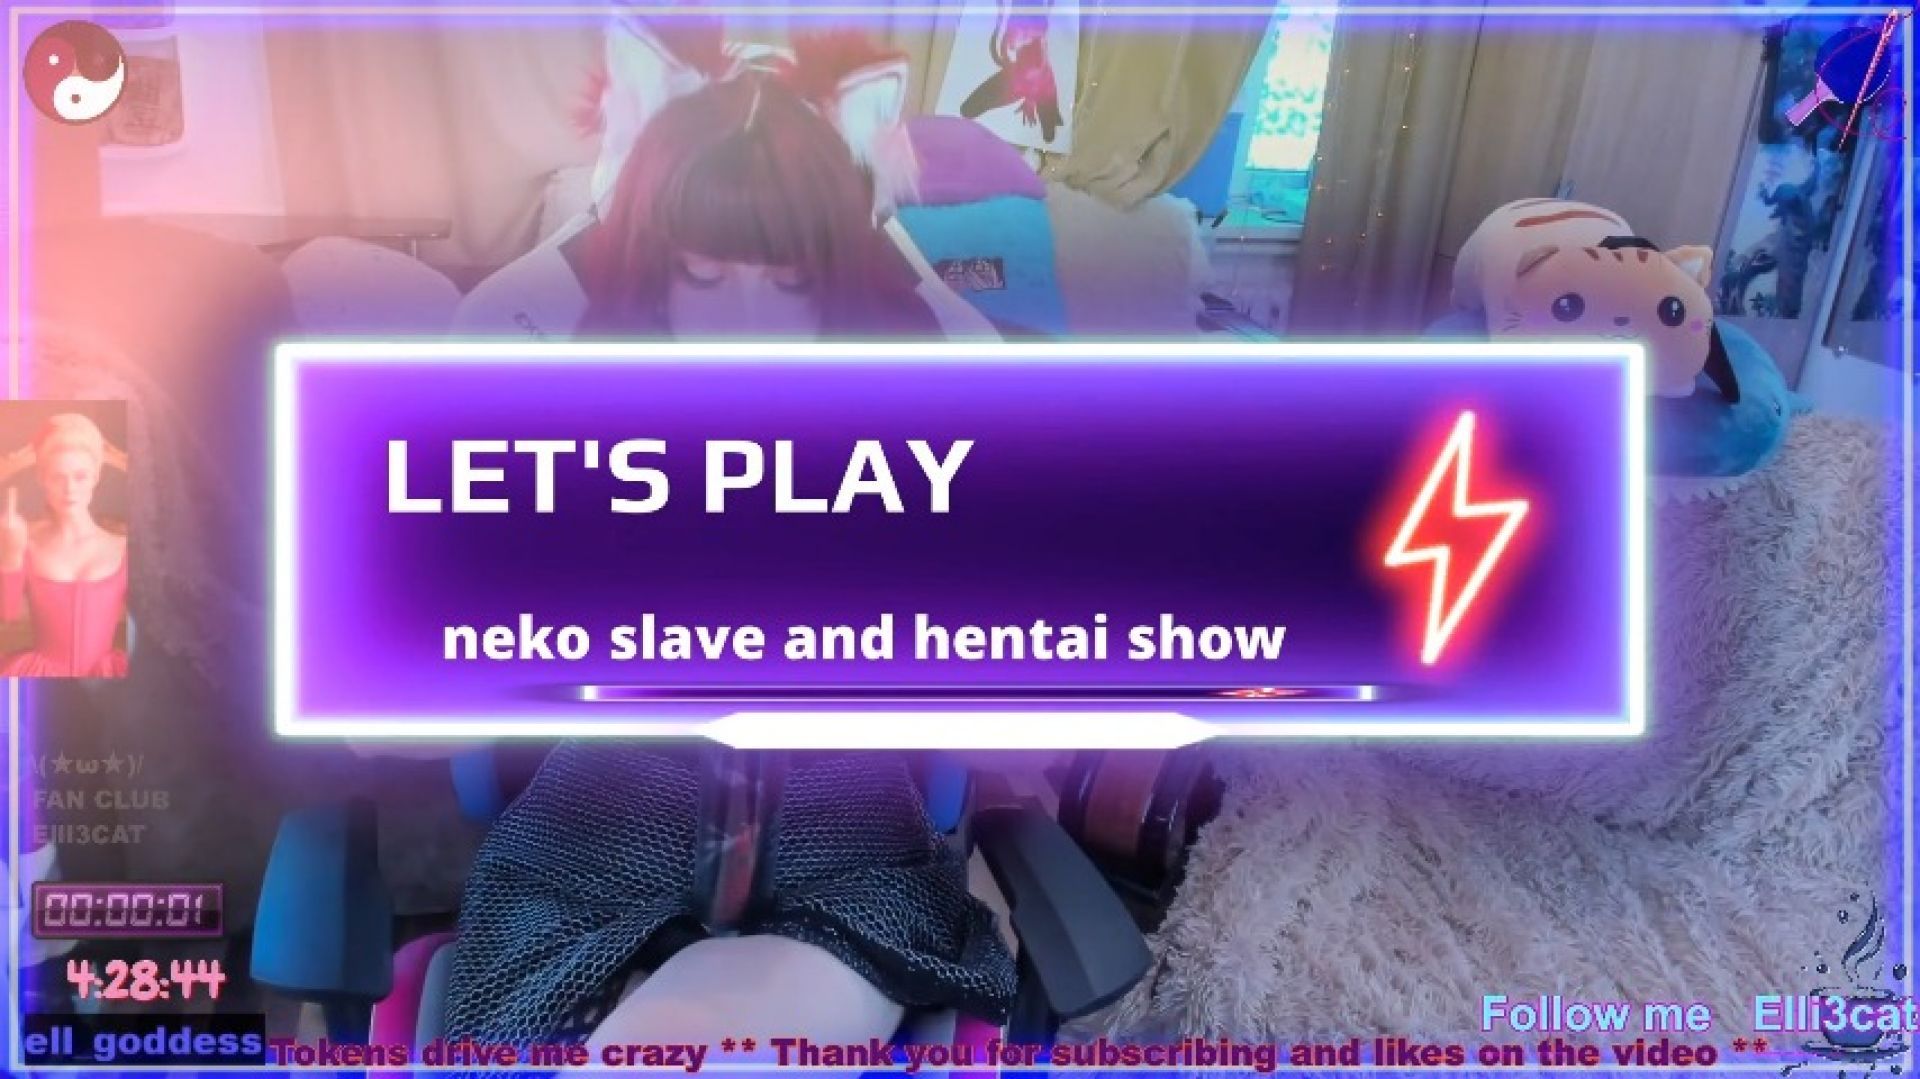 NEKO SLAVE AND HENTAI SHOW